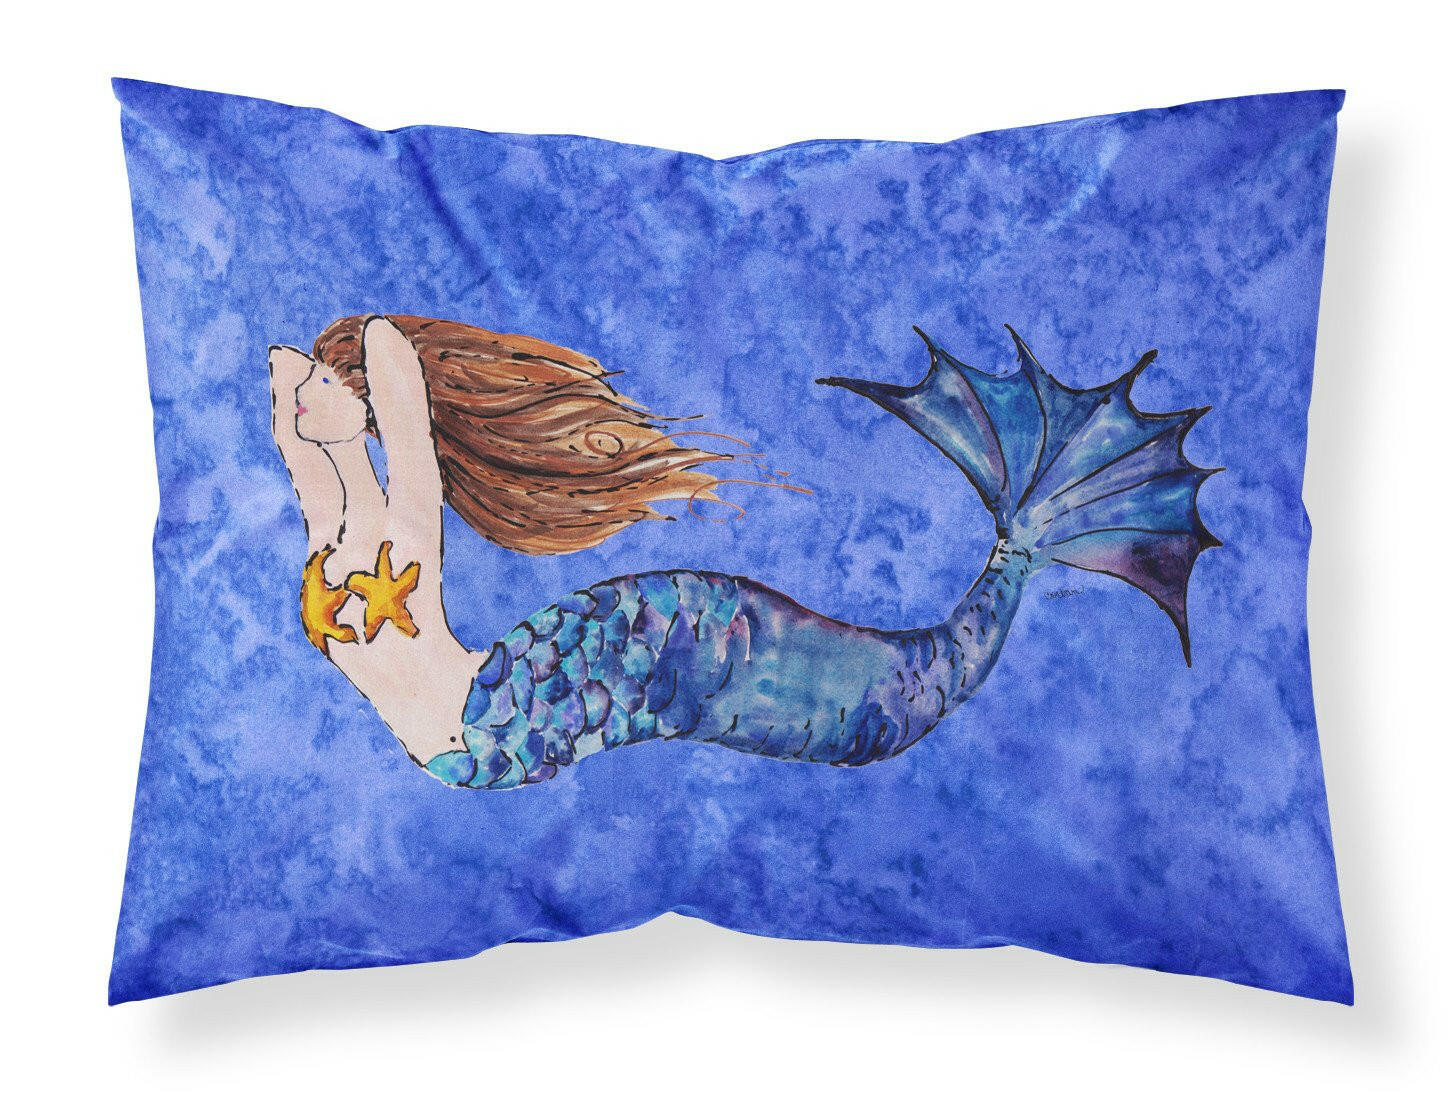 Brunette Mermaid on Blue Fabric Standard Pillowcase 8725PILLOWCASE by Caroline's Treasures